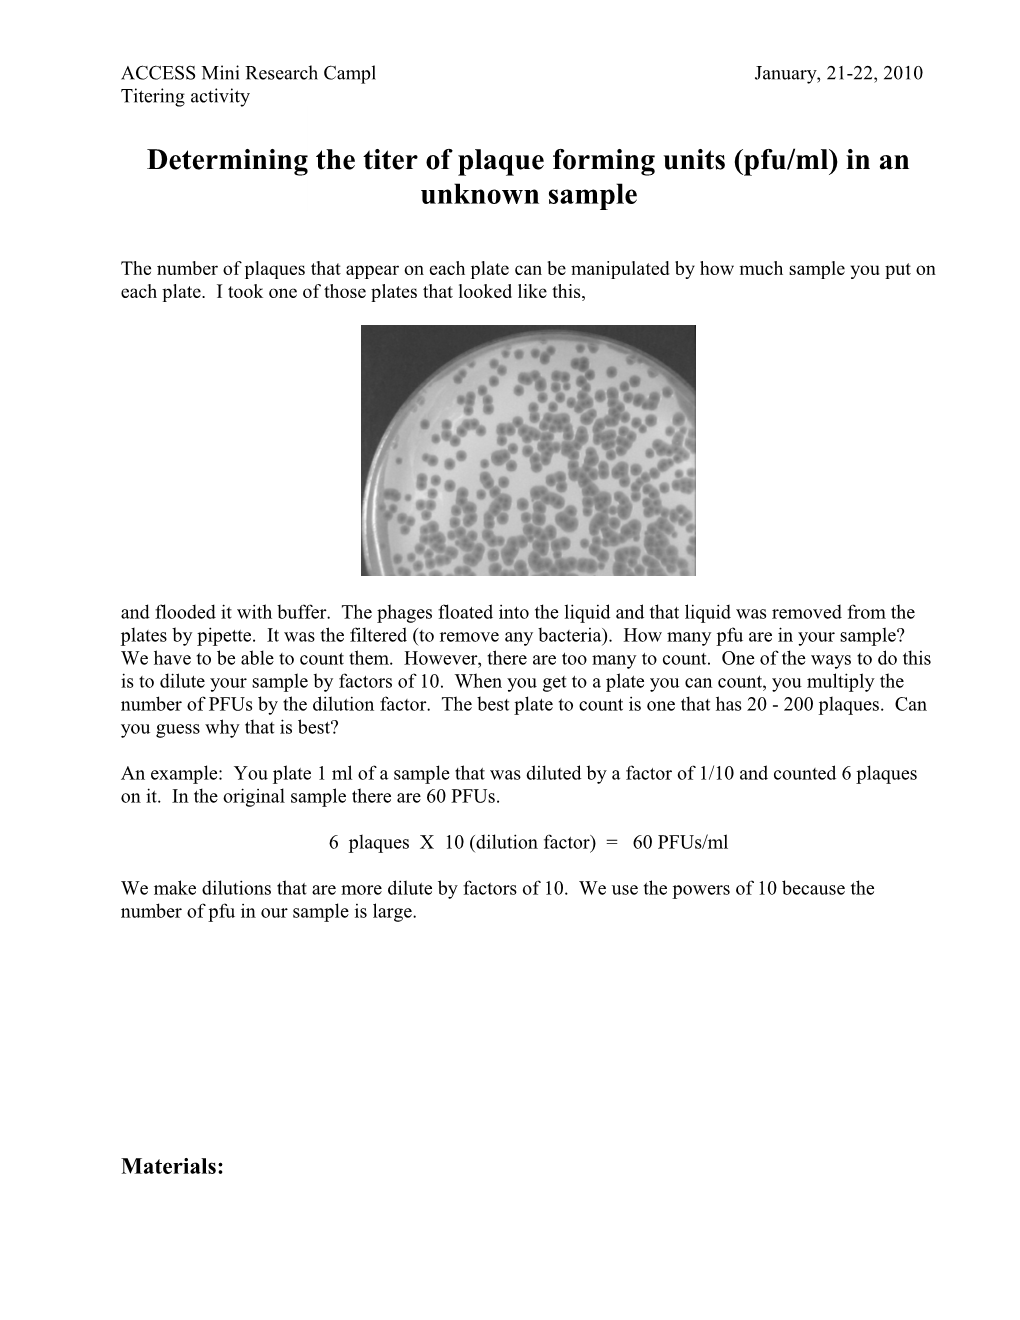 Phage Precipitation & Resuspension